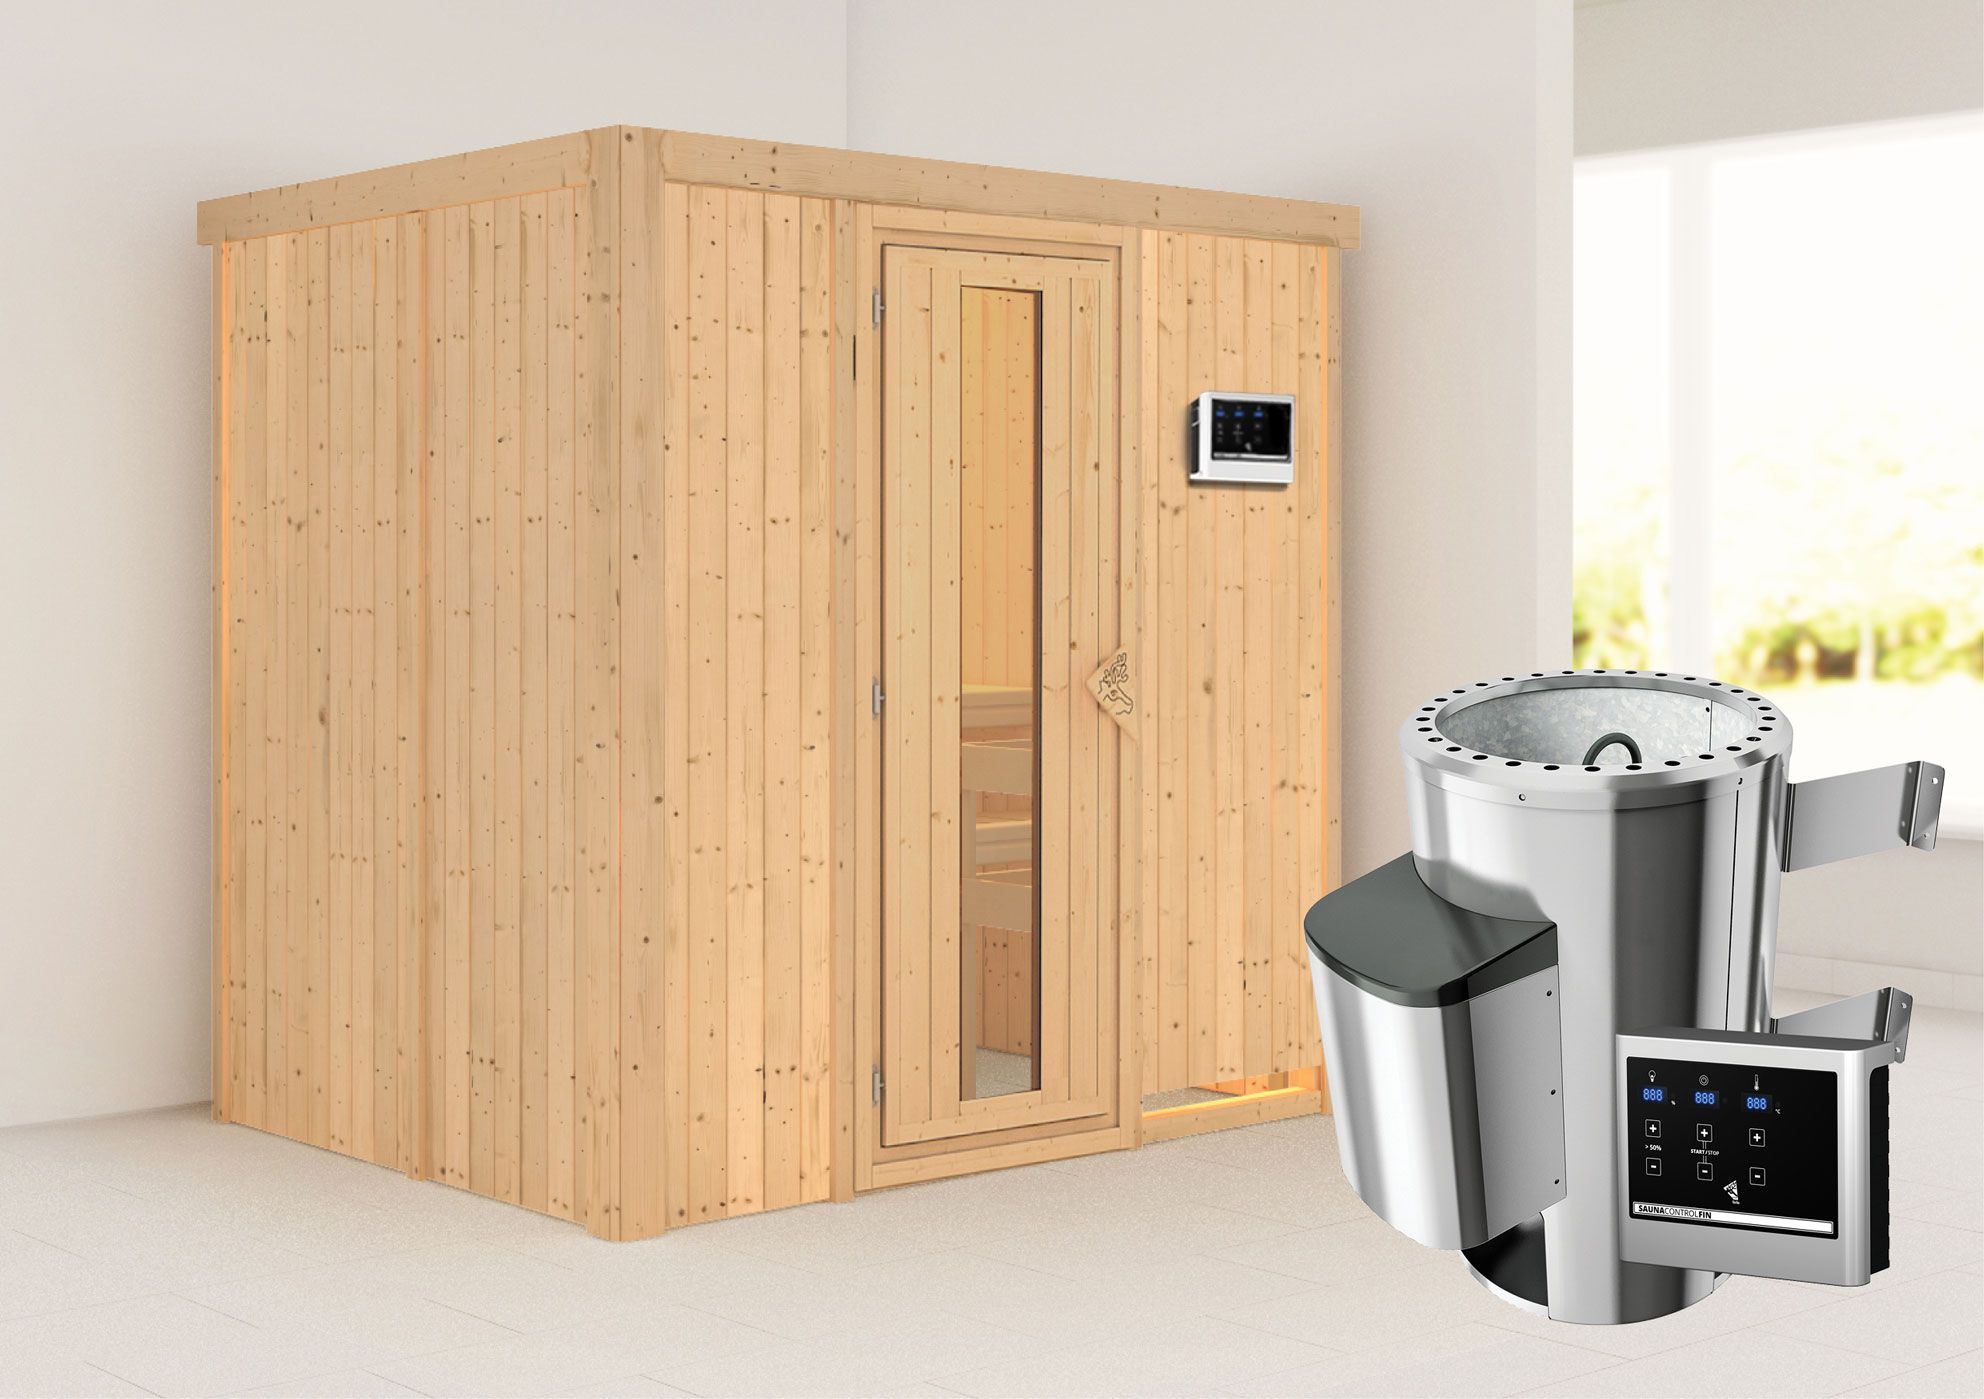 Sauna "Jarle" SET met energiebesparende deur - kleur: naturel, kachel externe regeling eenvoudig 3,6 kW - 196 x 151 x 198 cm (B x D x H)